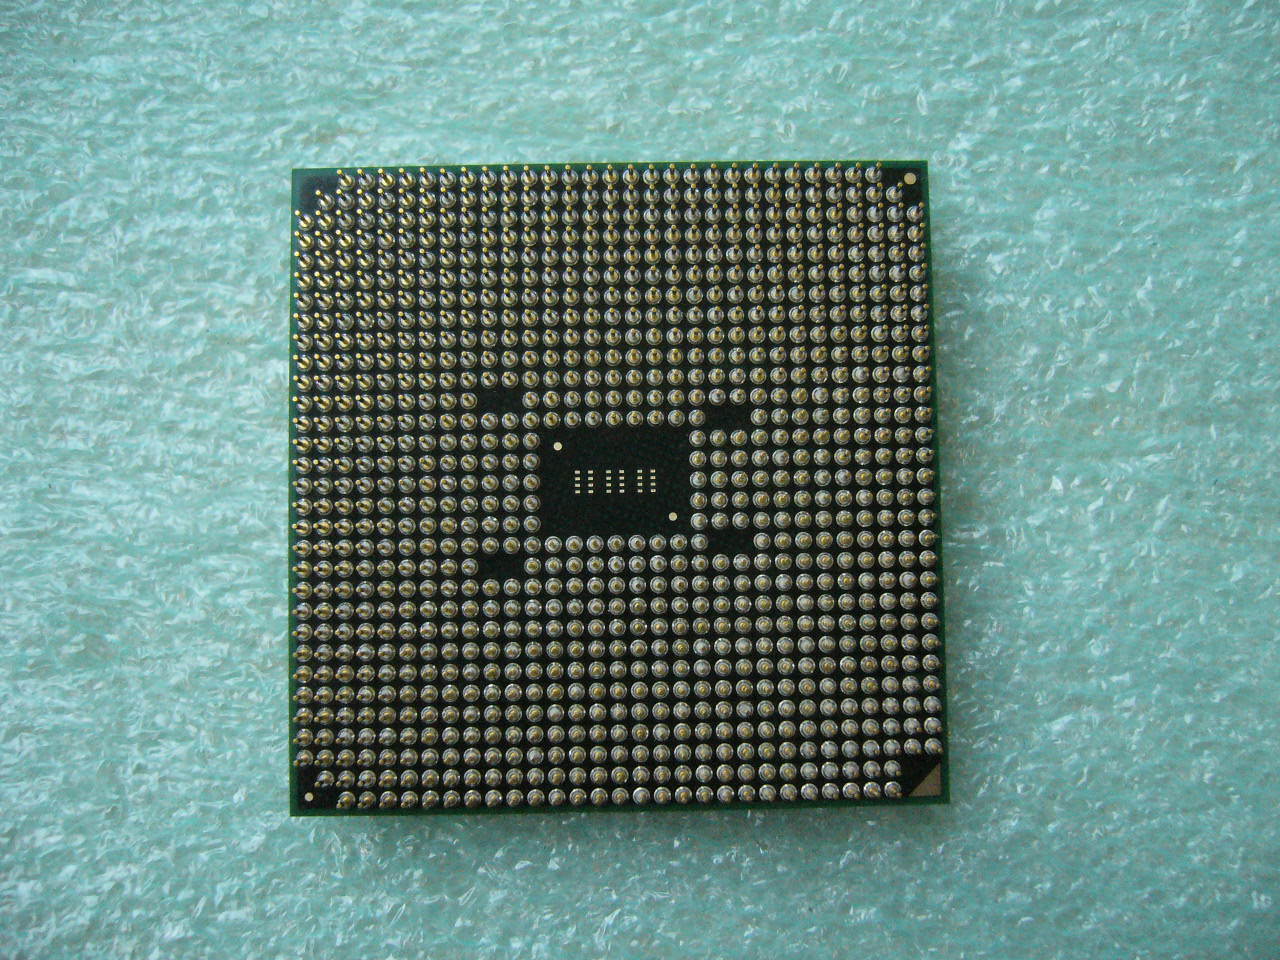 QTY 1x AMD E2-3200 2.4 GHz Dual-Core (ED32000JZ22GX) CPU Socket FM1 - Click Image to Close